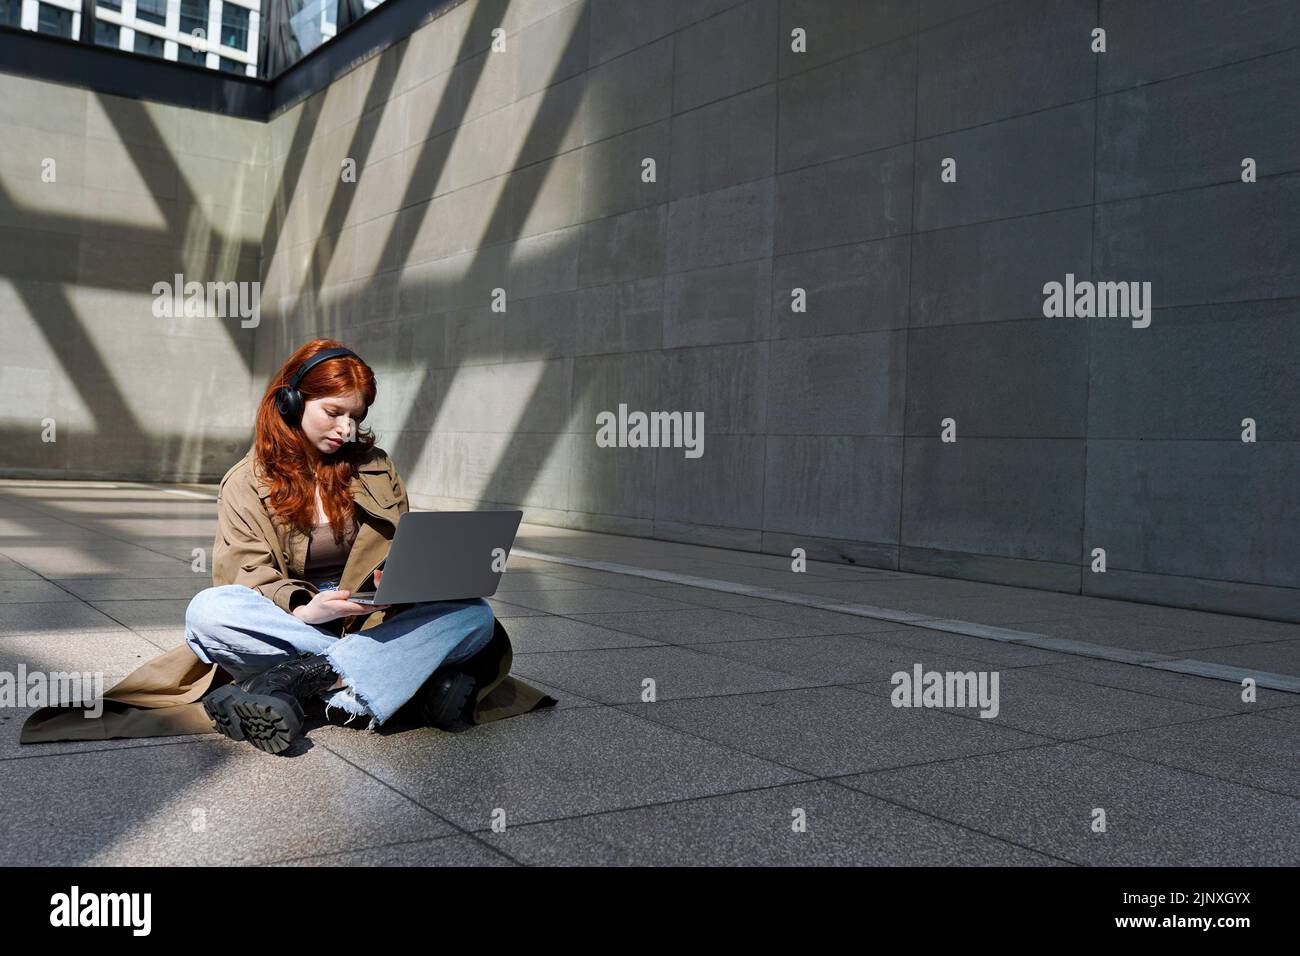 Teen redhead girl wearing headphones using laptop in city urban location. Stock Photo